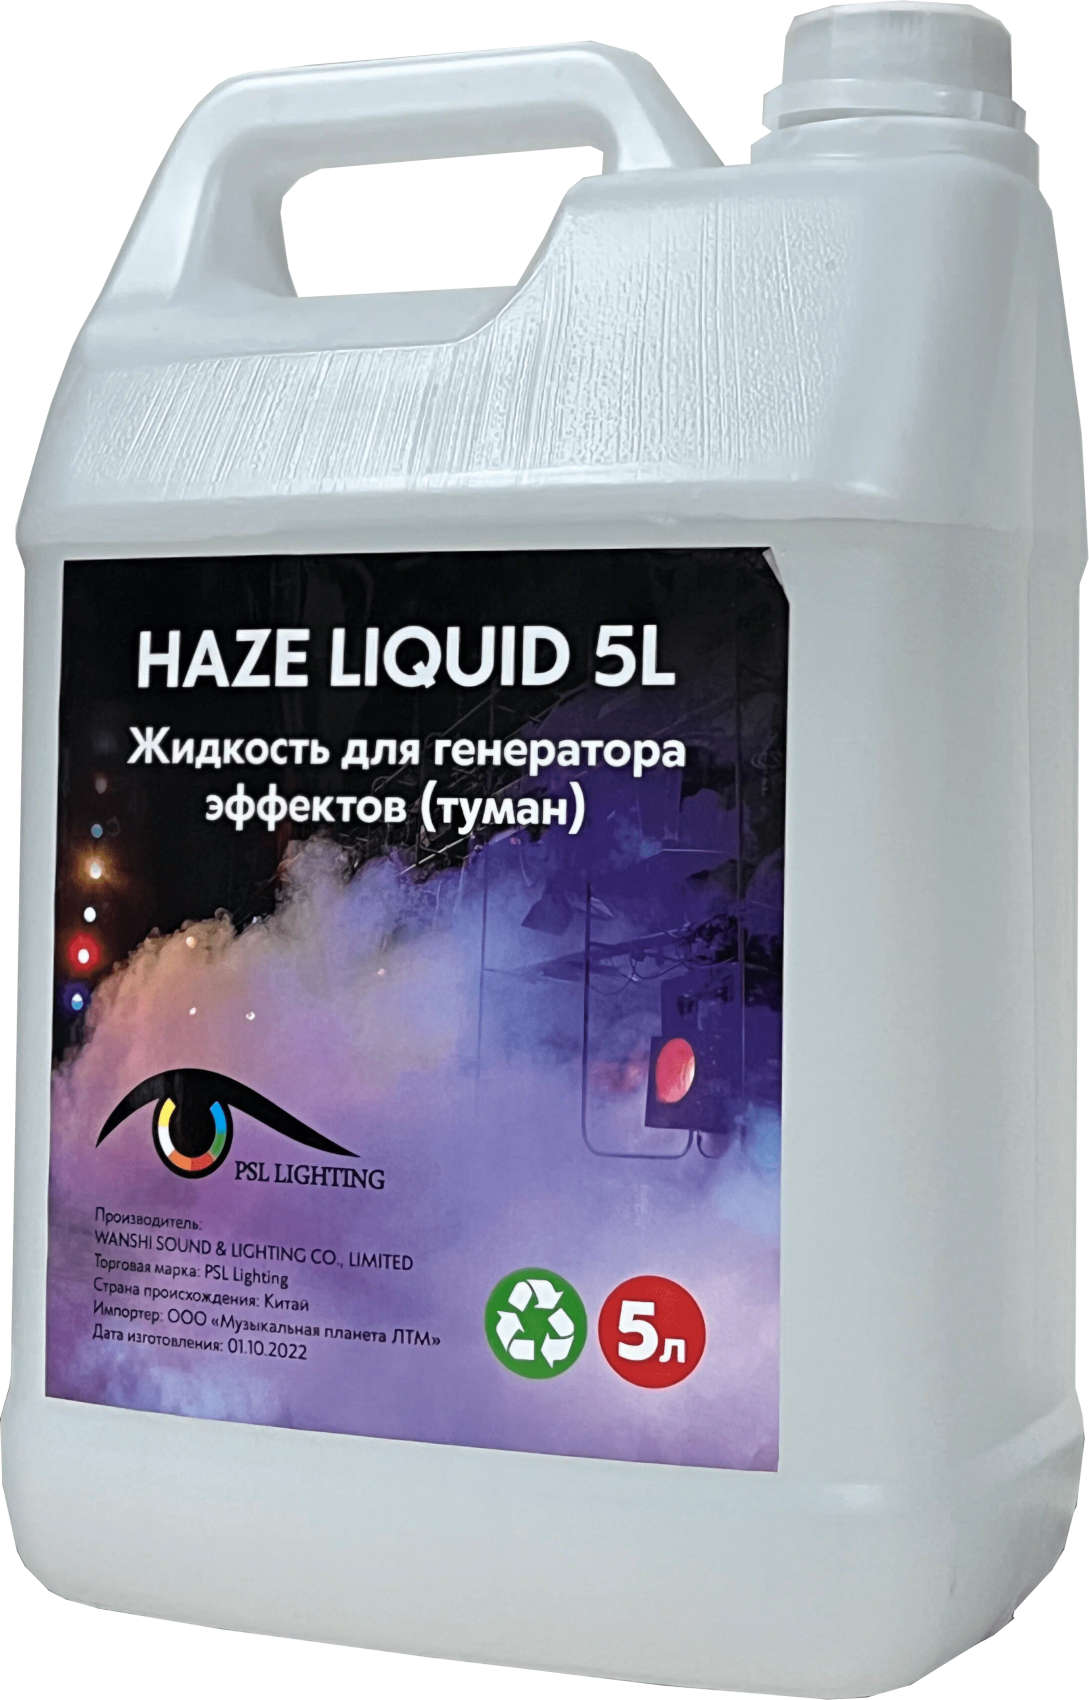 PSL Lighting Haze liquid 5L - фото 2